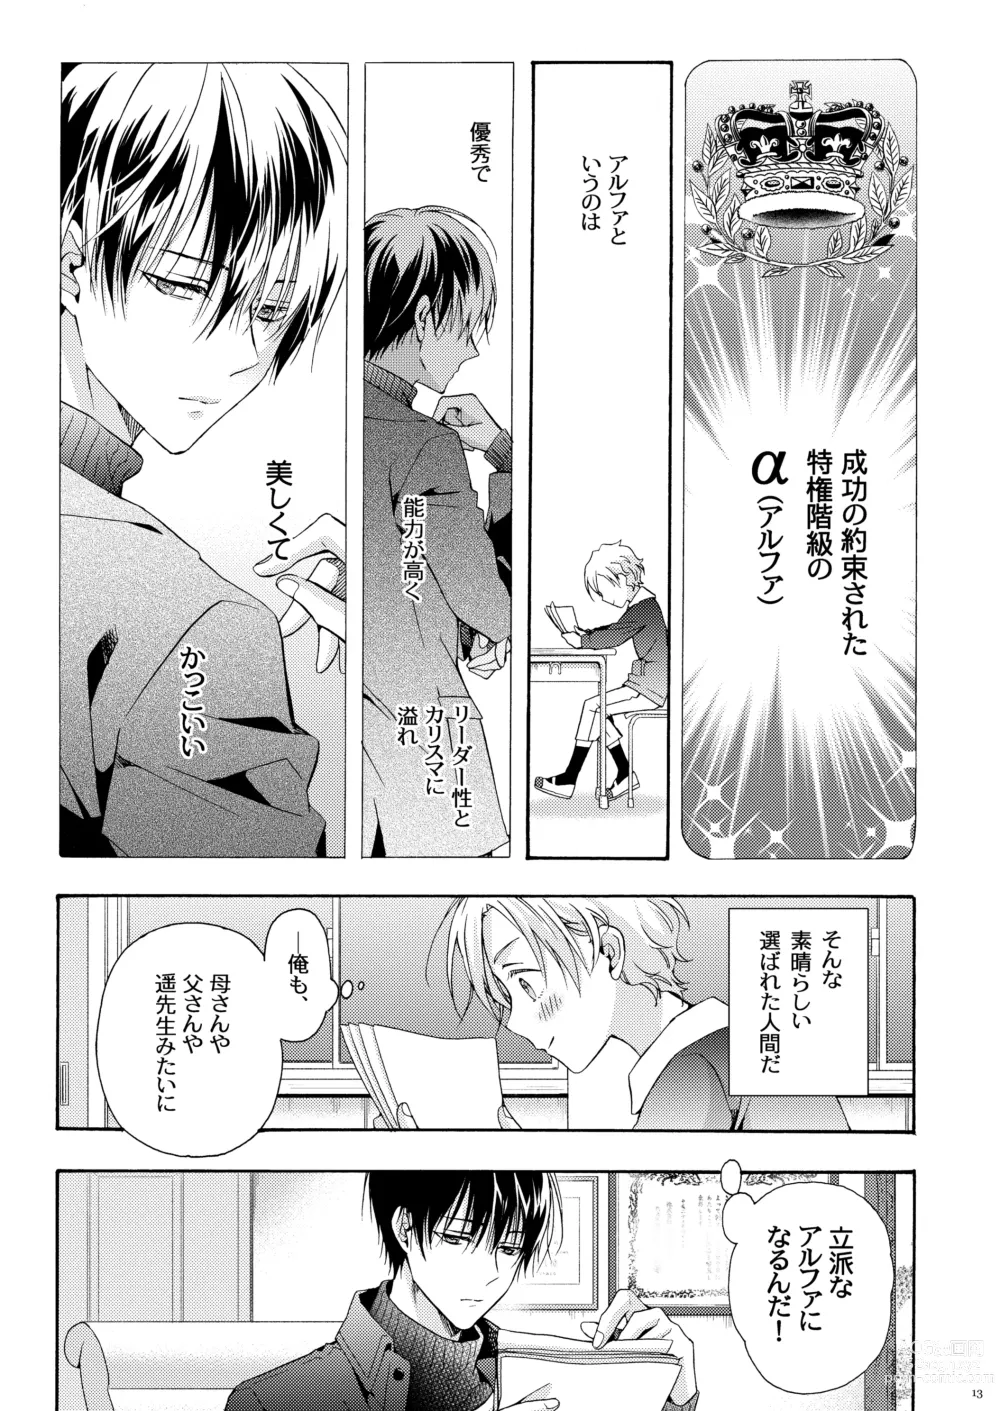 Page 12 of manga Boku no Tame no Omega